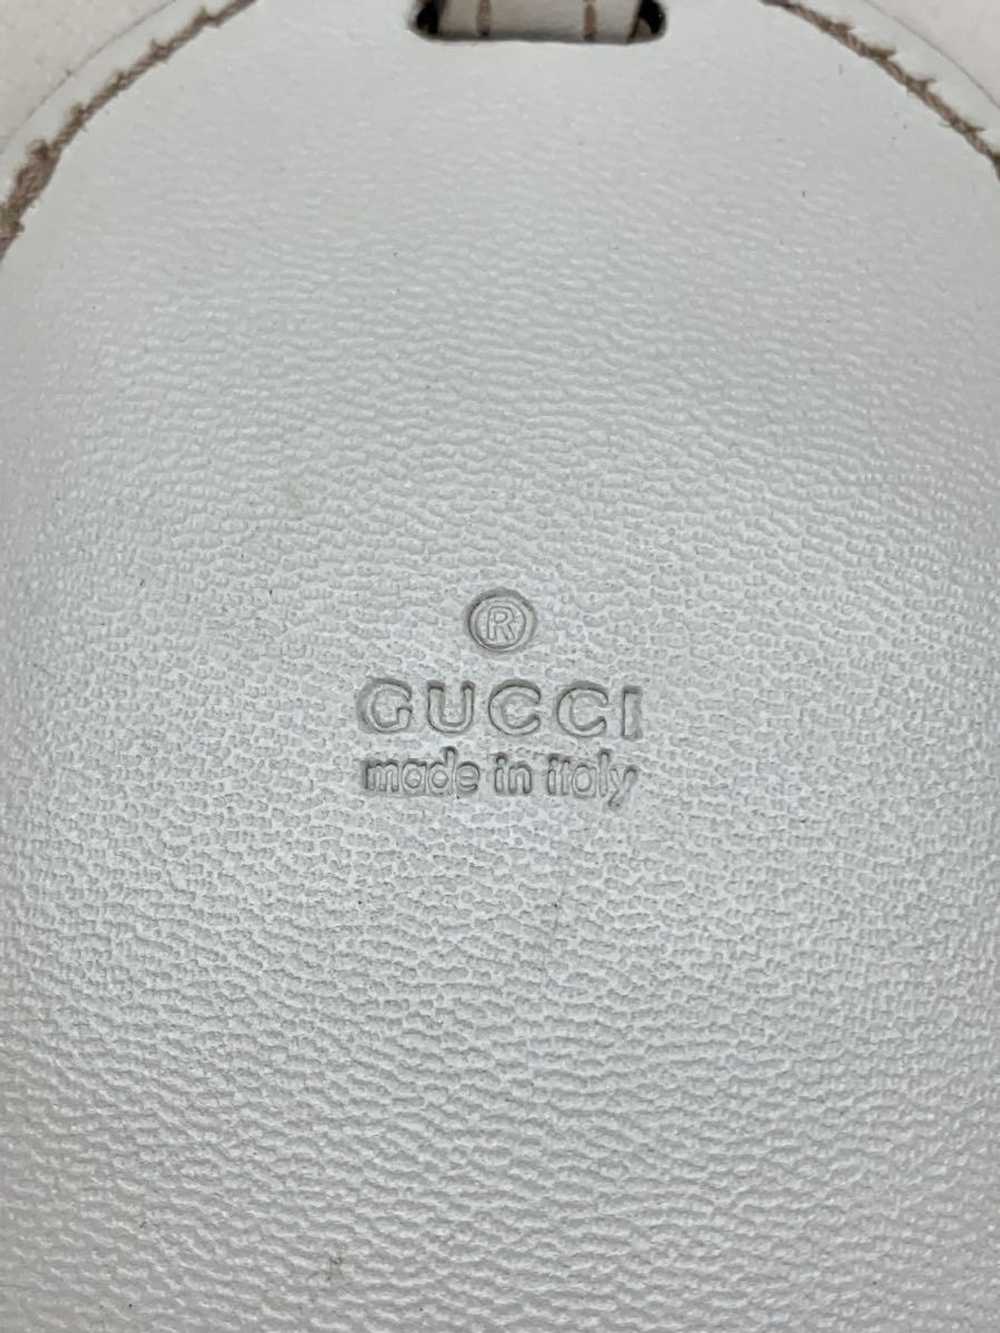 Used Gucci Tote Bag Gg Supreme/Leather/Wht - image 5